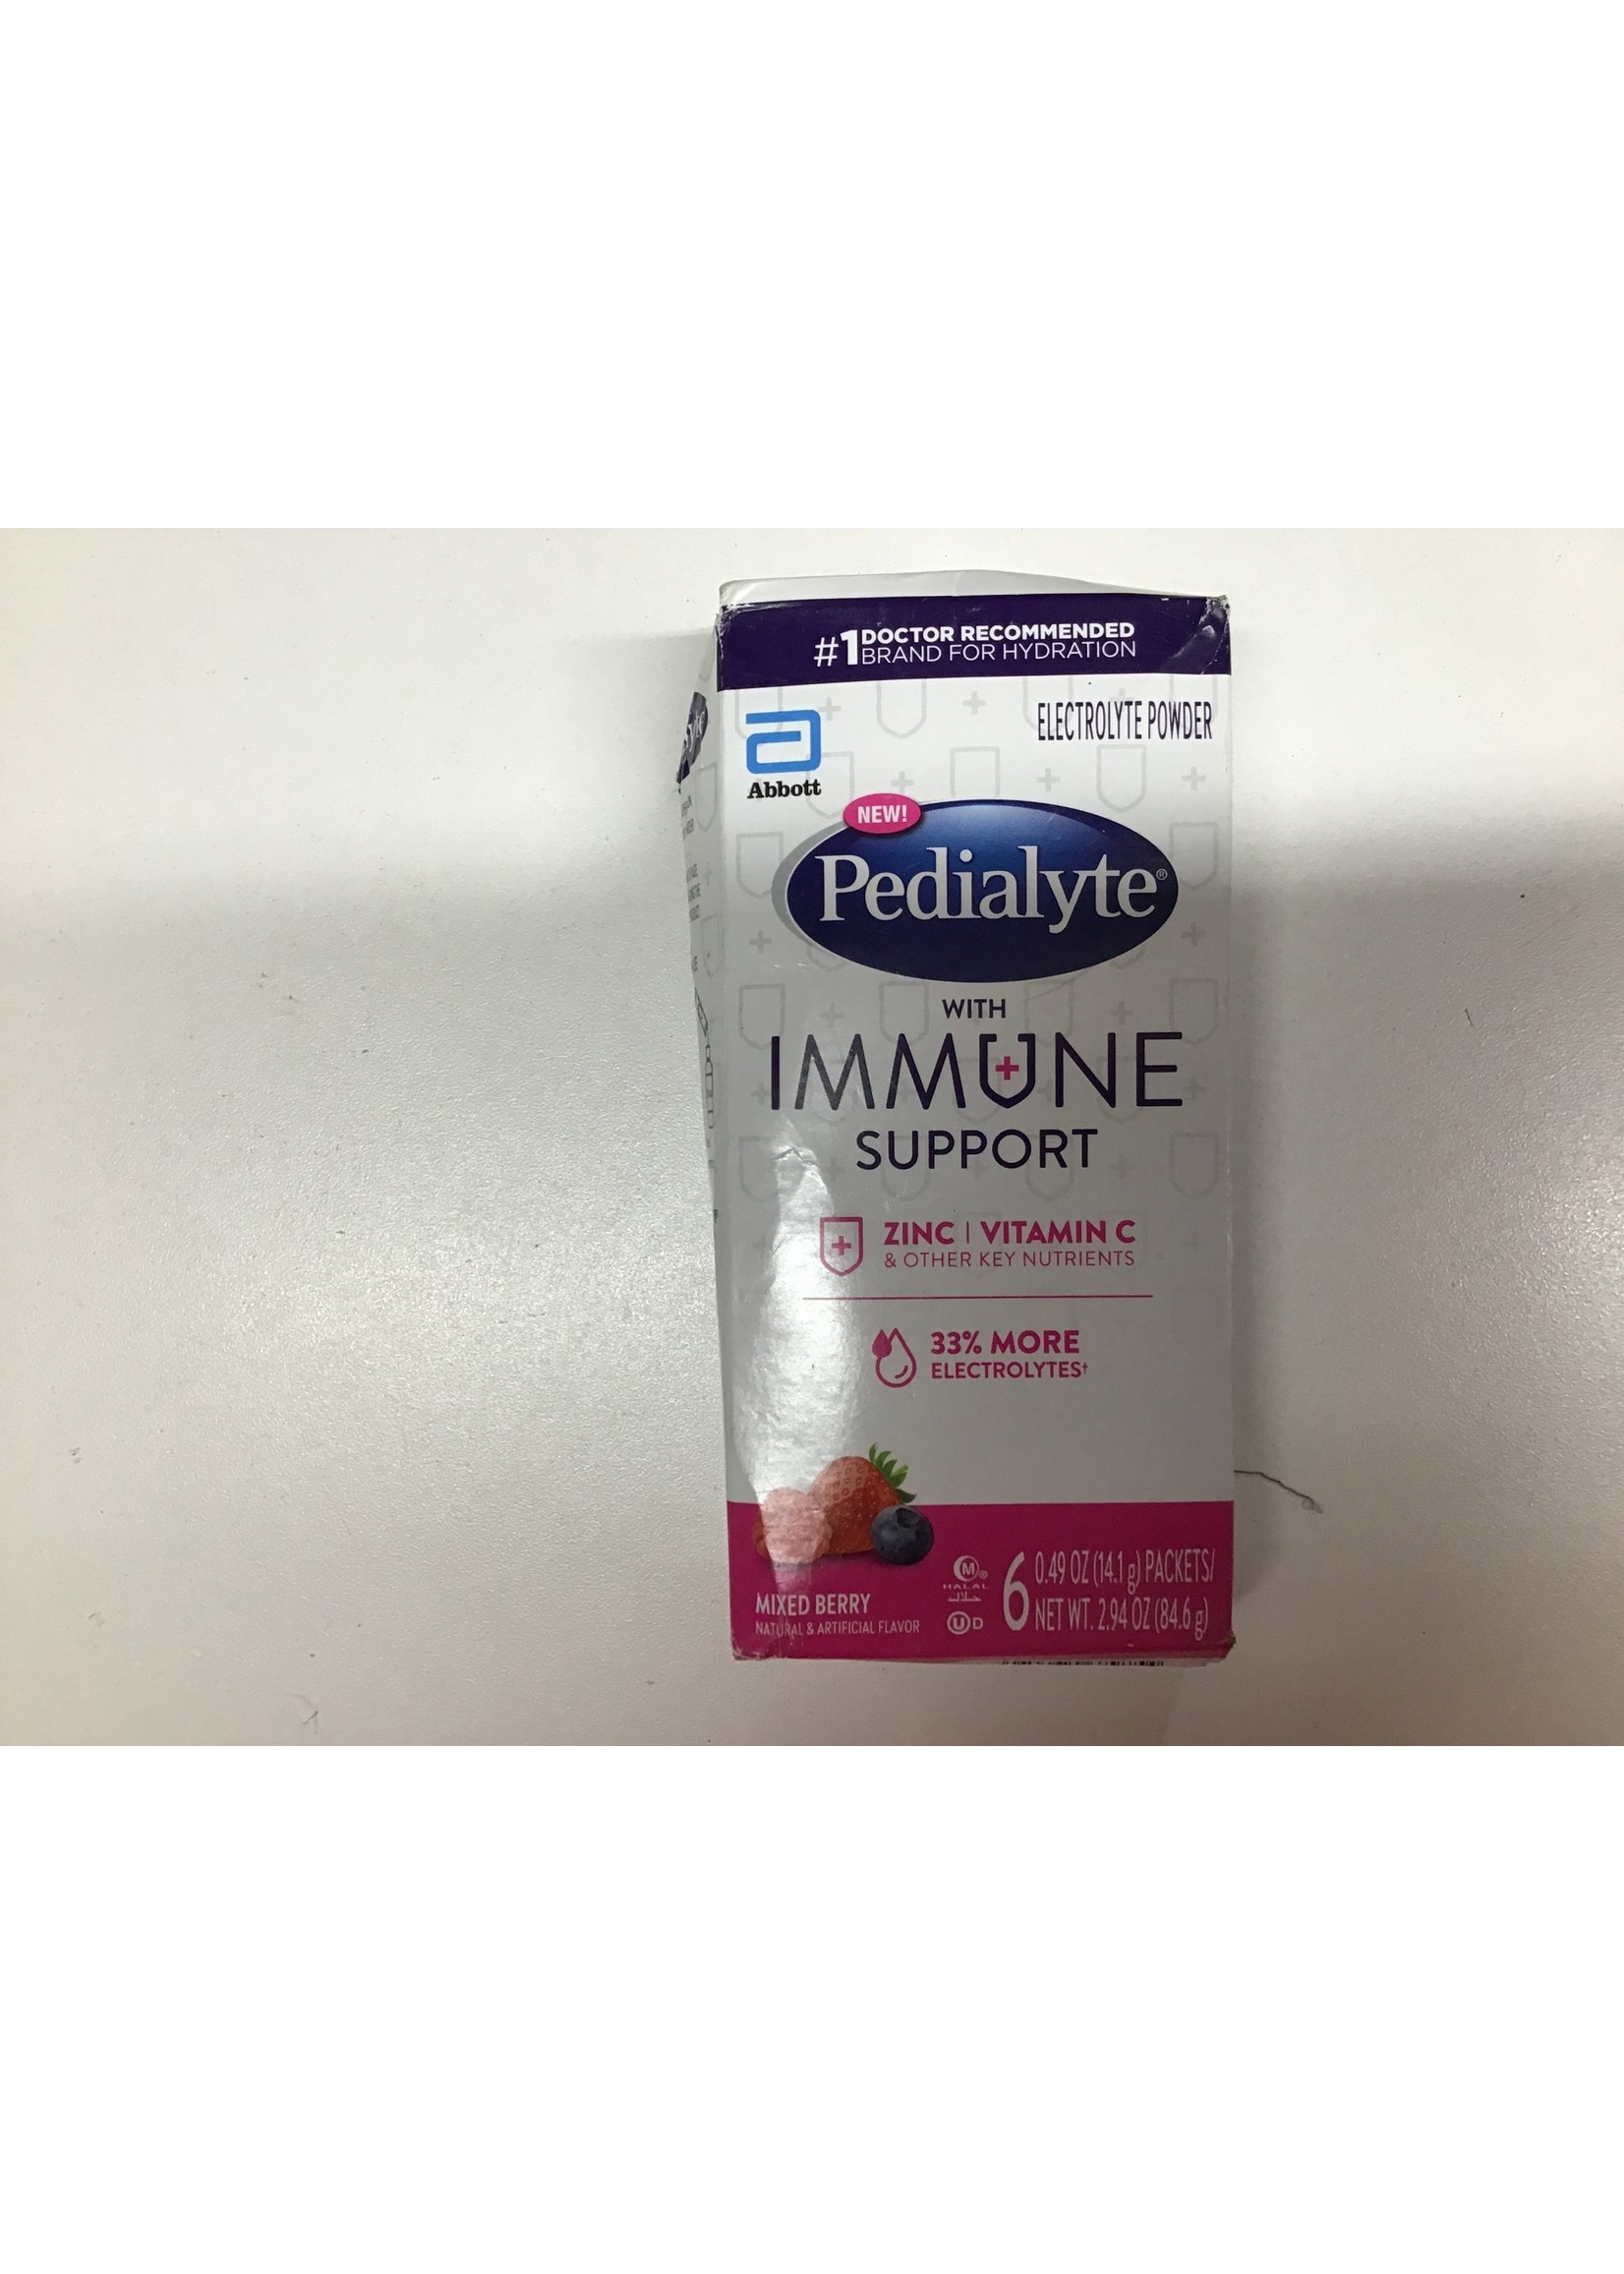 *damaged box* Pedialyte Immune Support Electrolyte Powder - Mixed Berry - 6ct/0.6oz